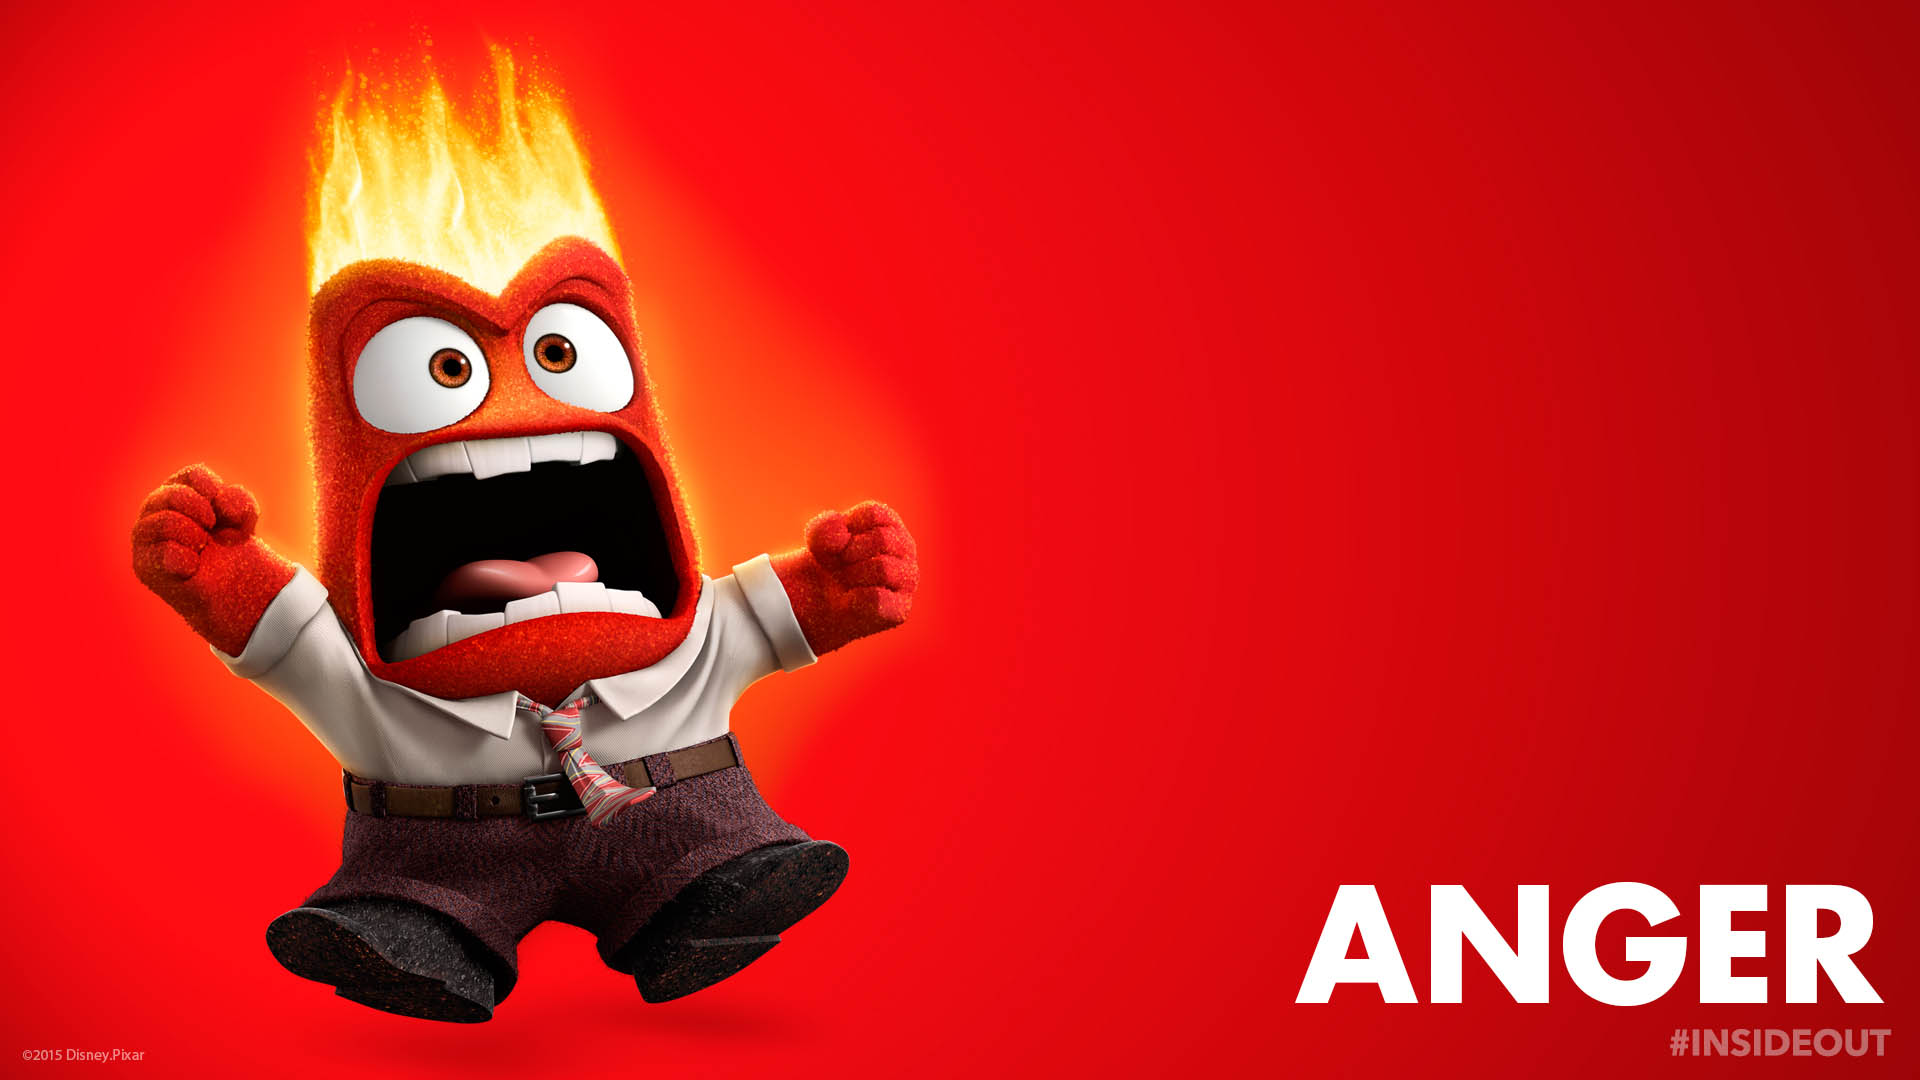 Inside Out Character Anger Disney Pixar Full HD